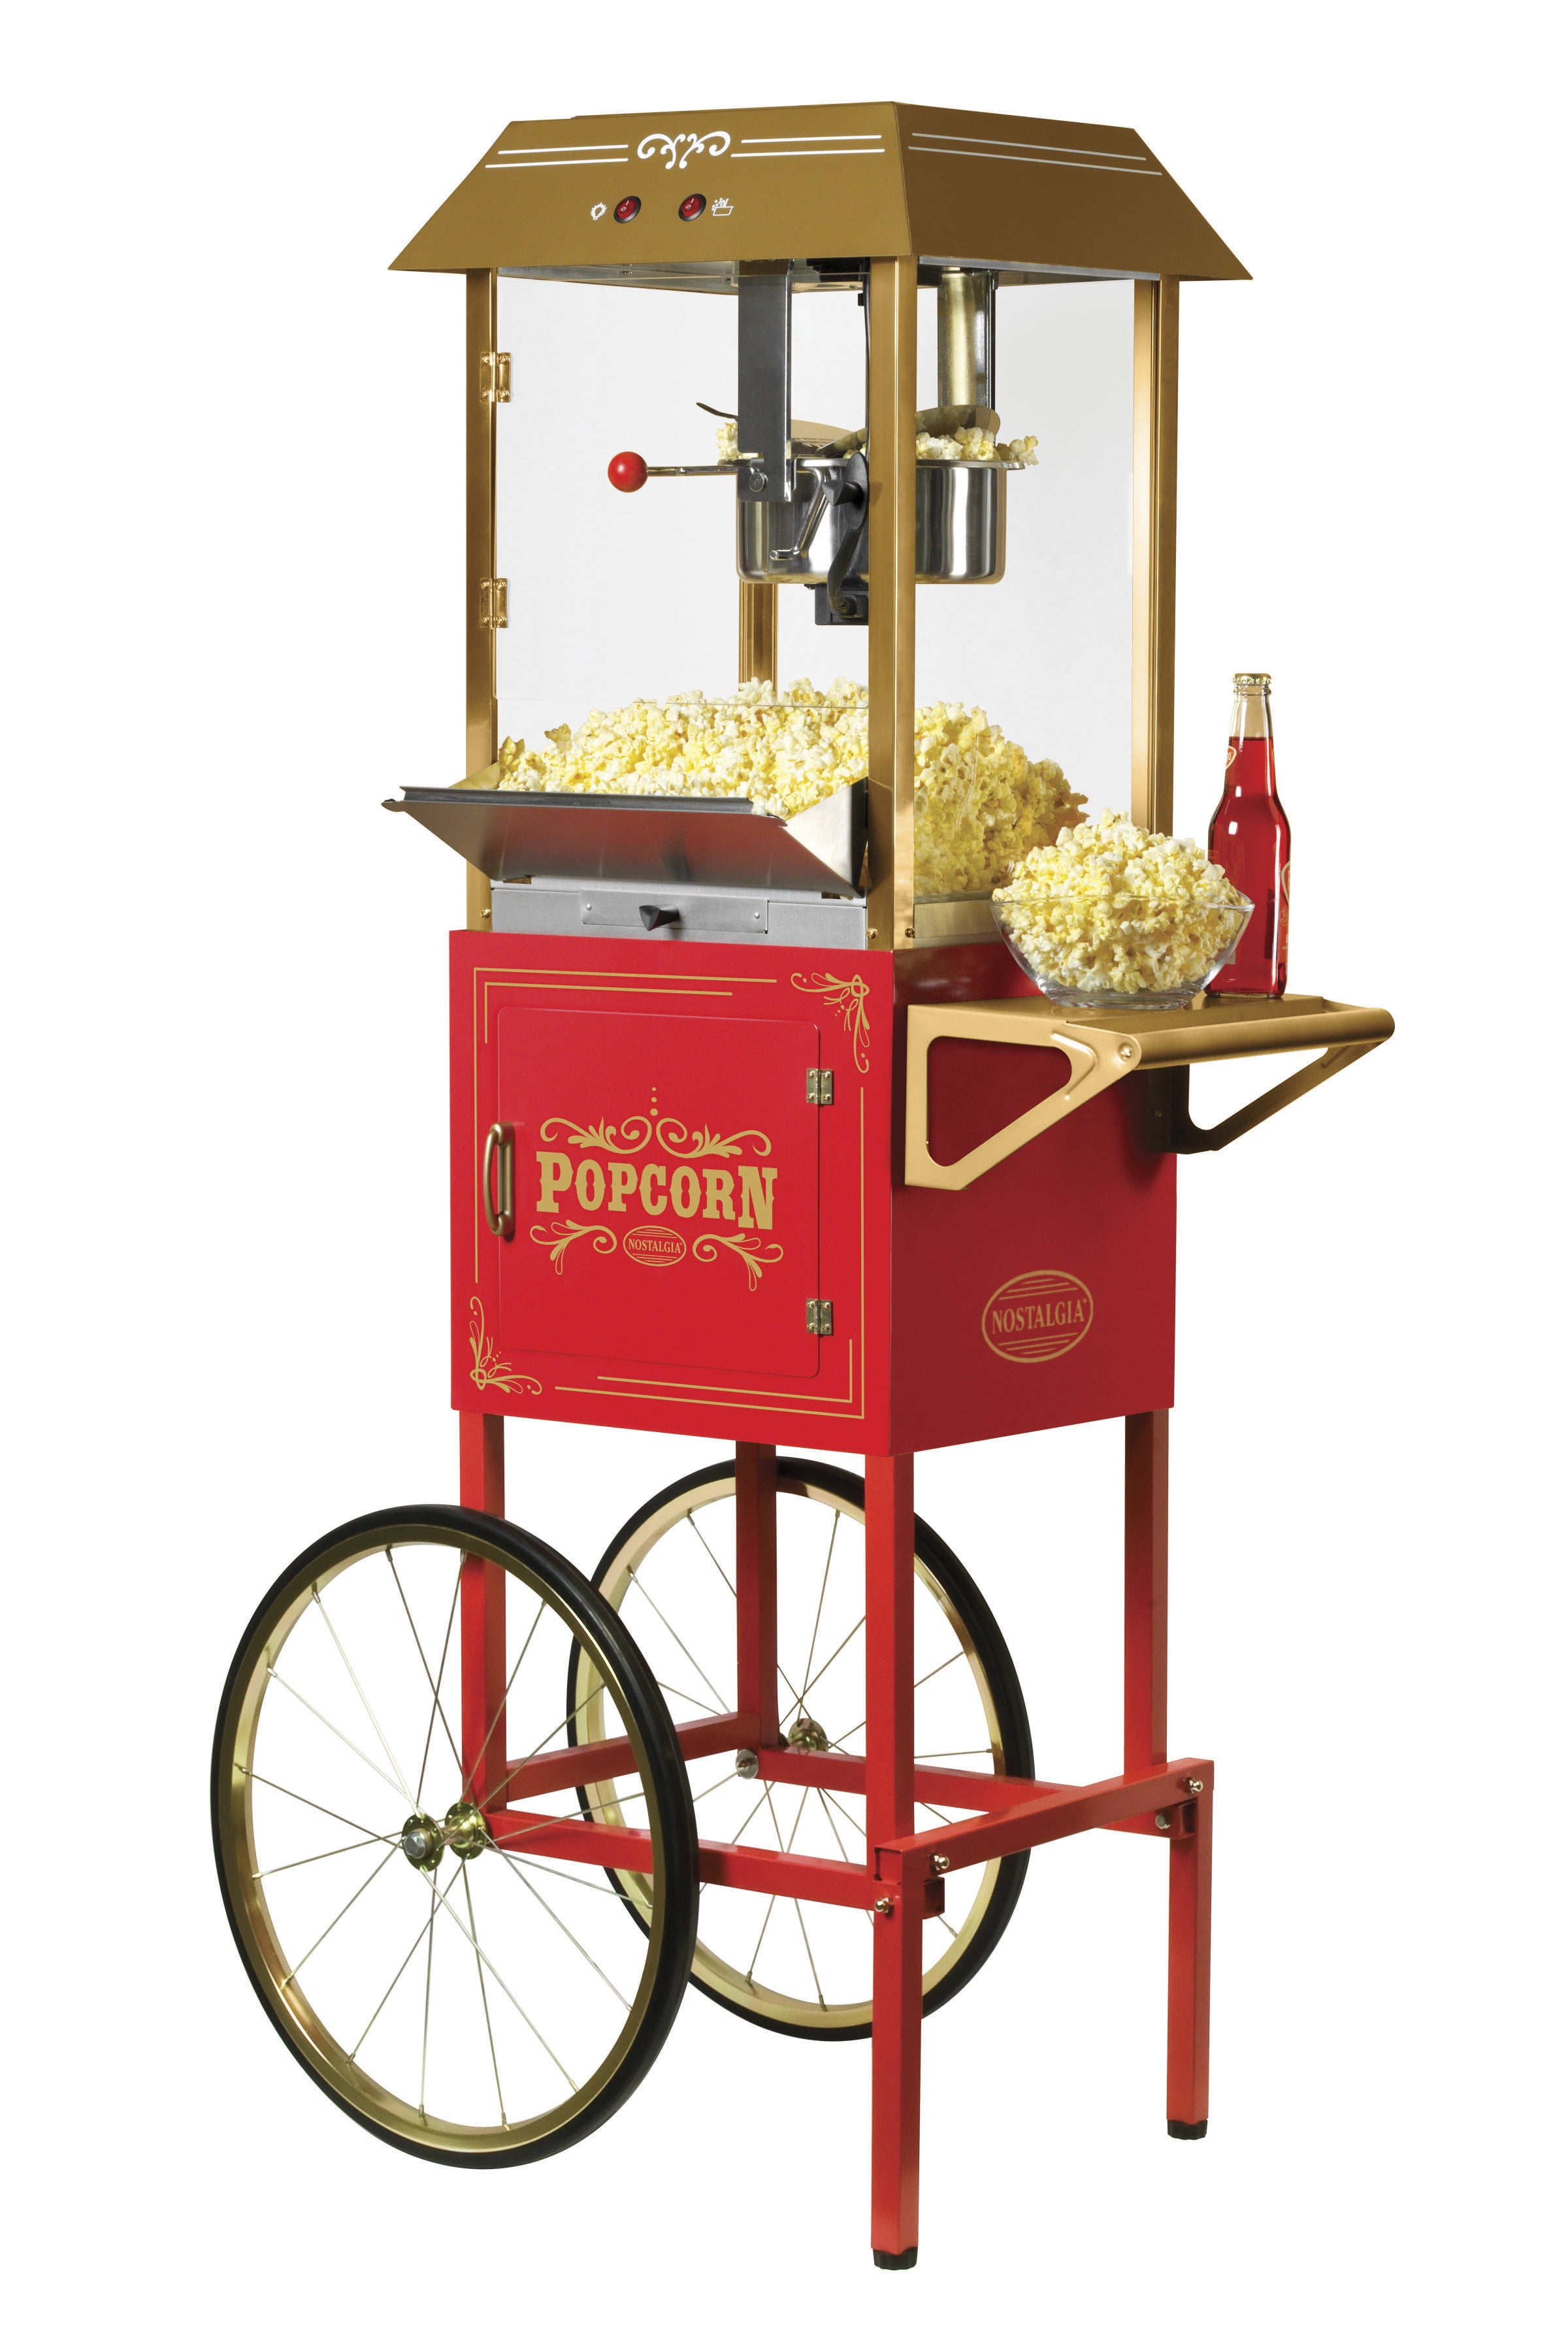 110V 220V Useful Vintage Retro Electric Popcorn Popper Machine